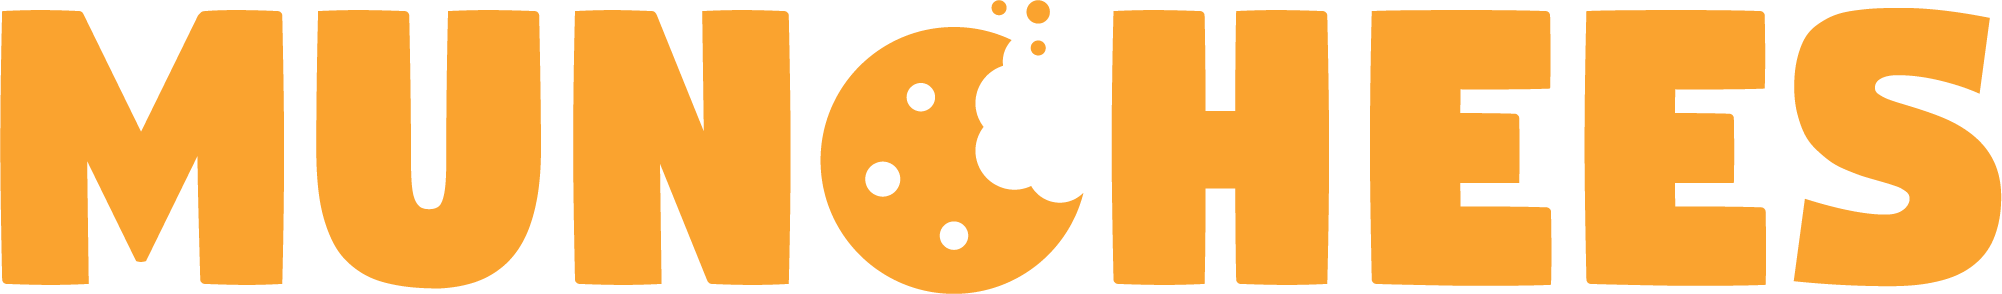 MUNCHEES logo